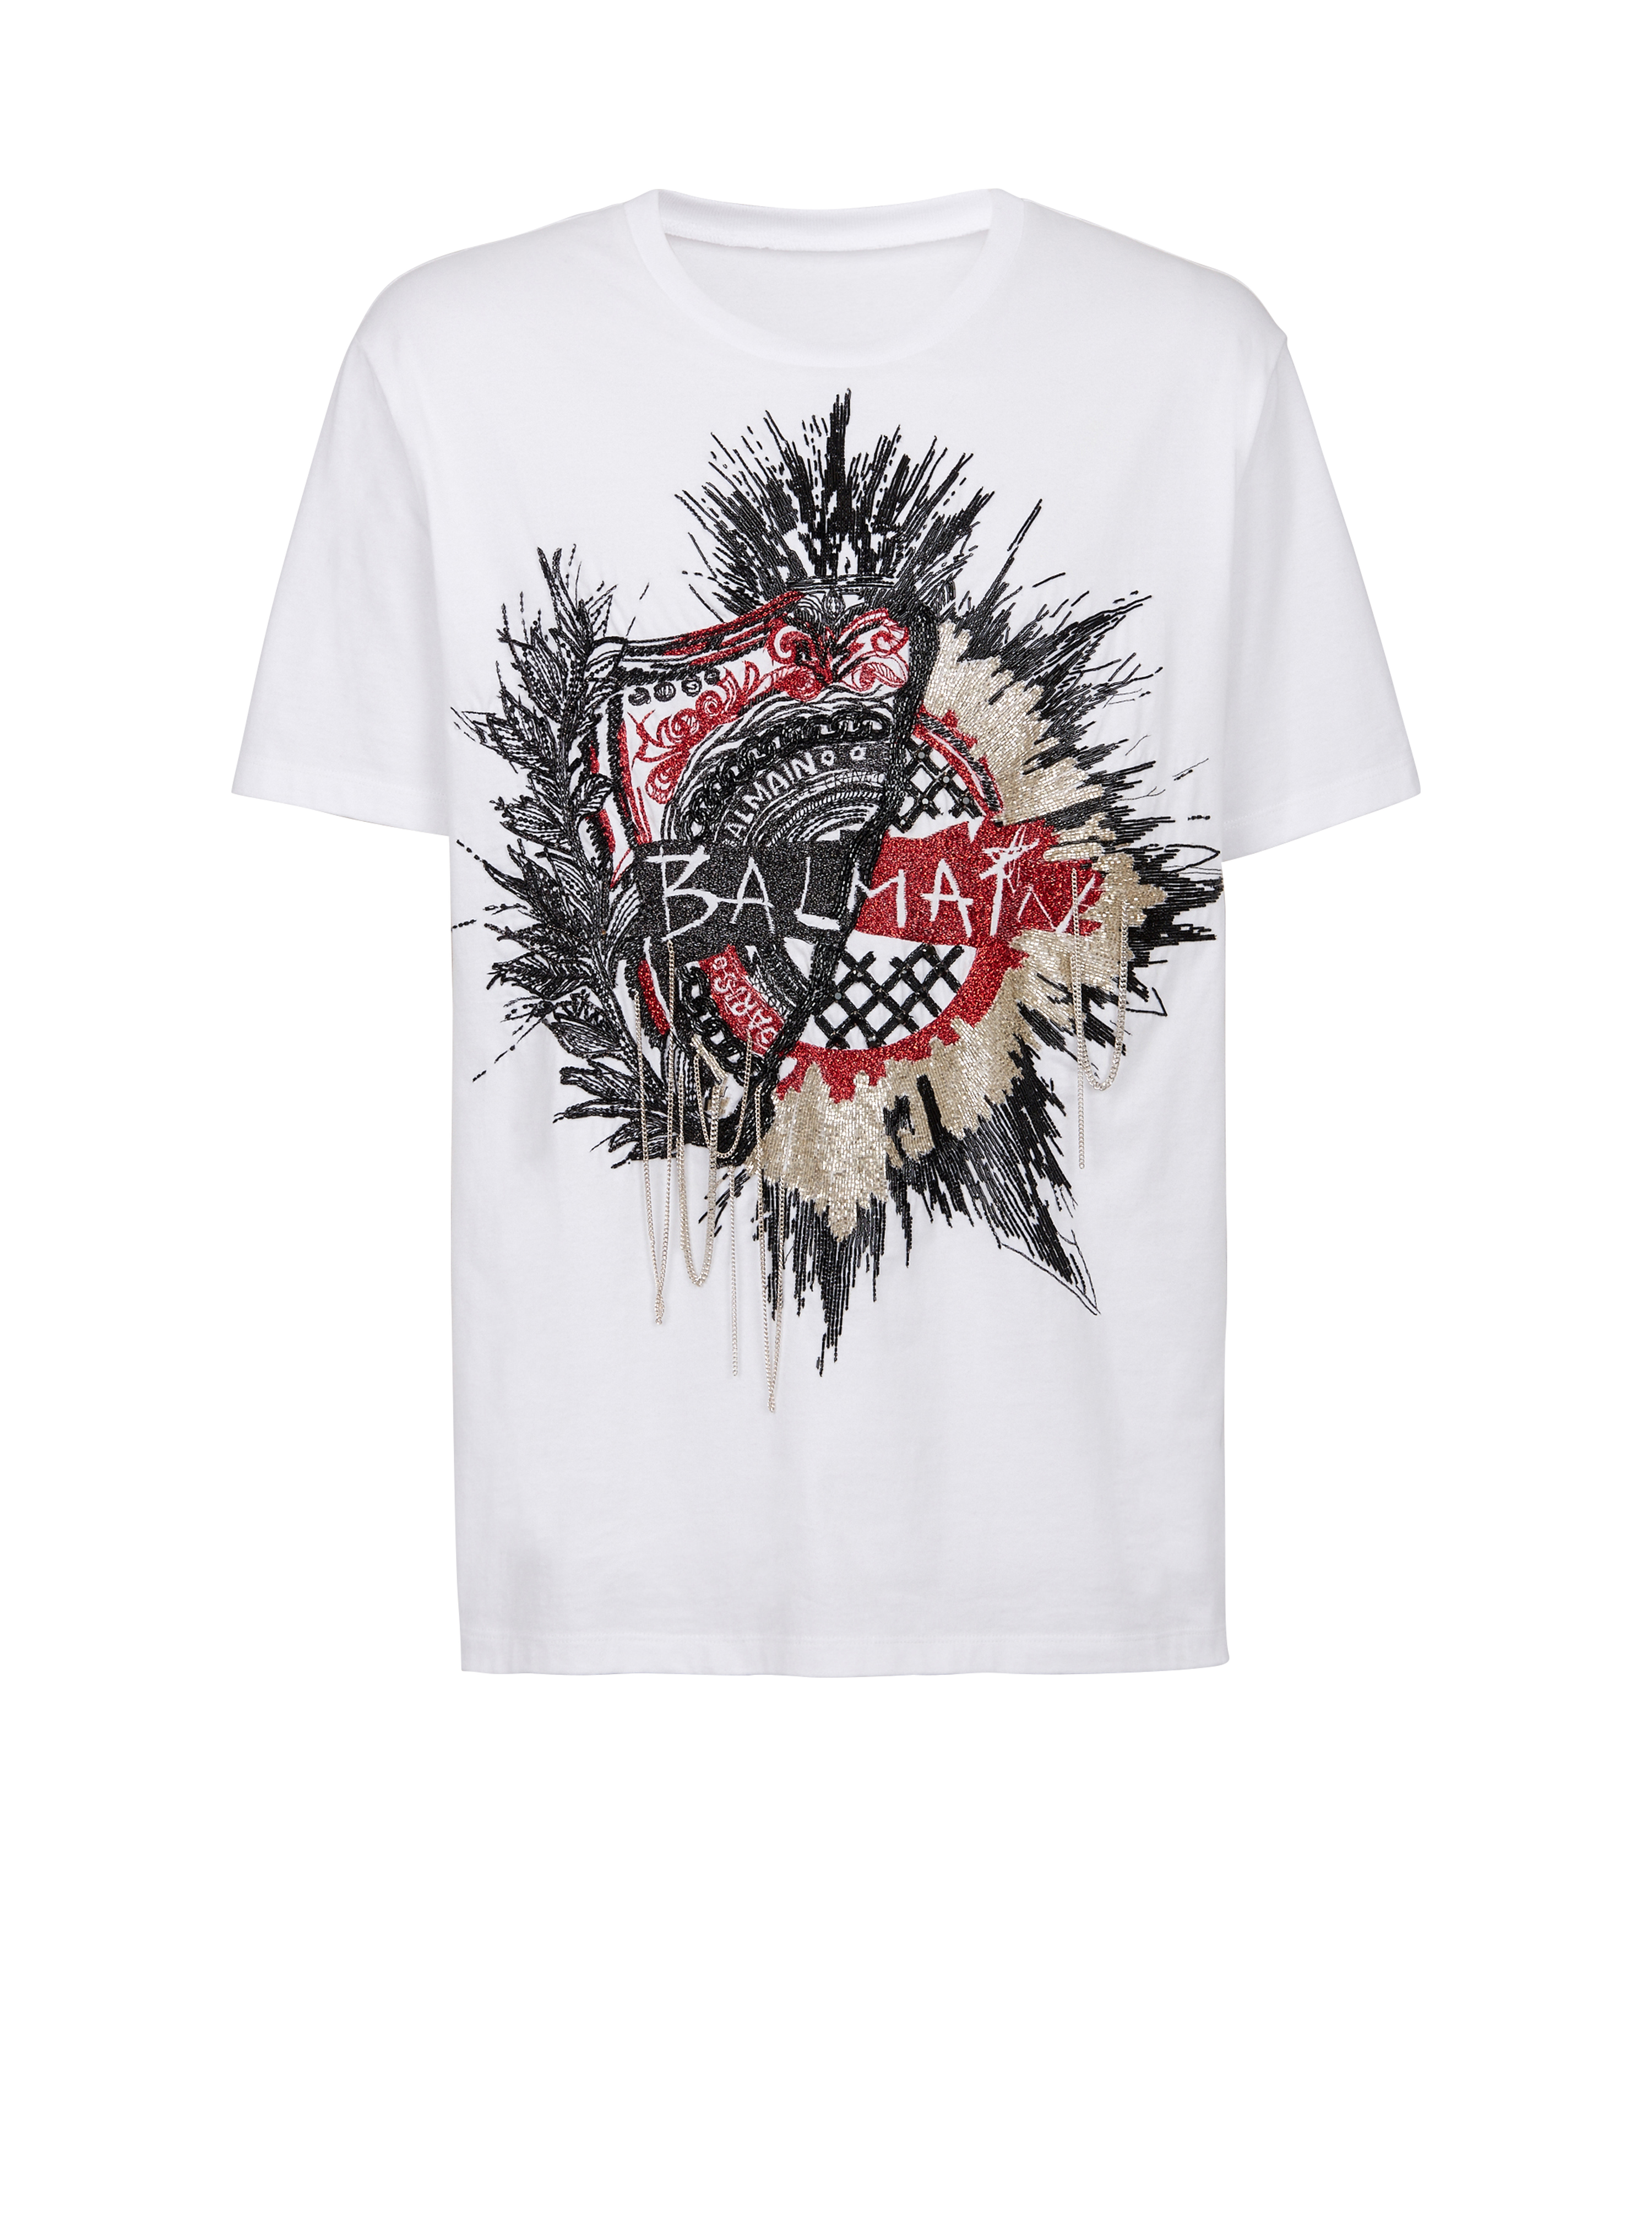 T-shirt oversize in cotone con logo Balmain ricamato, bianco